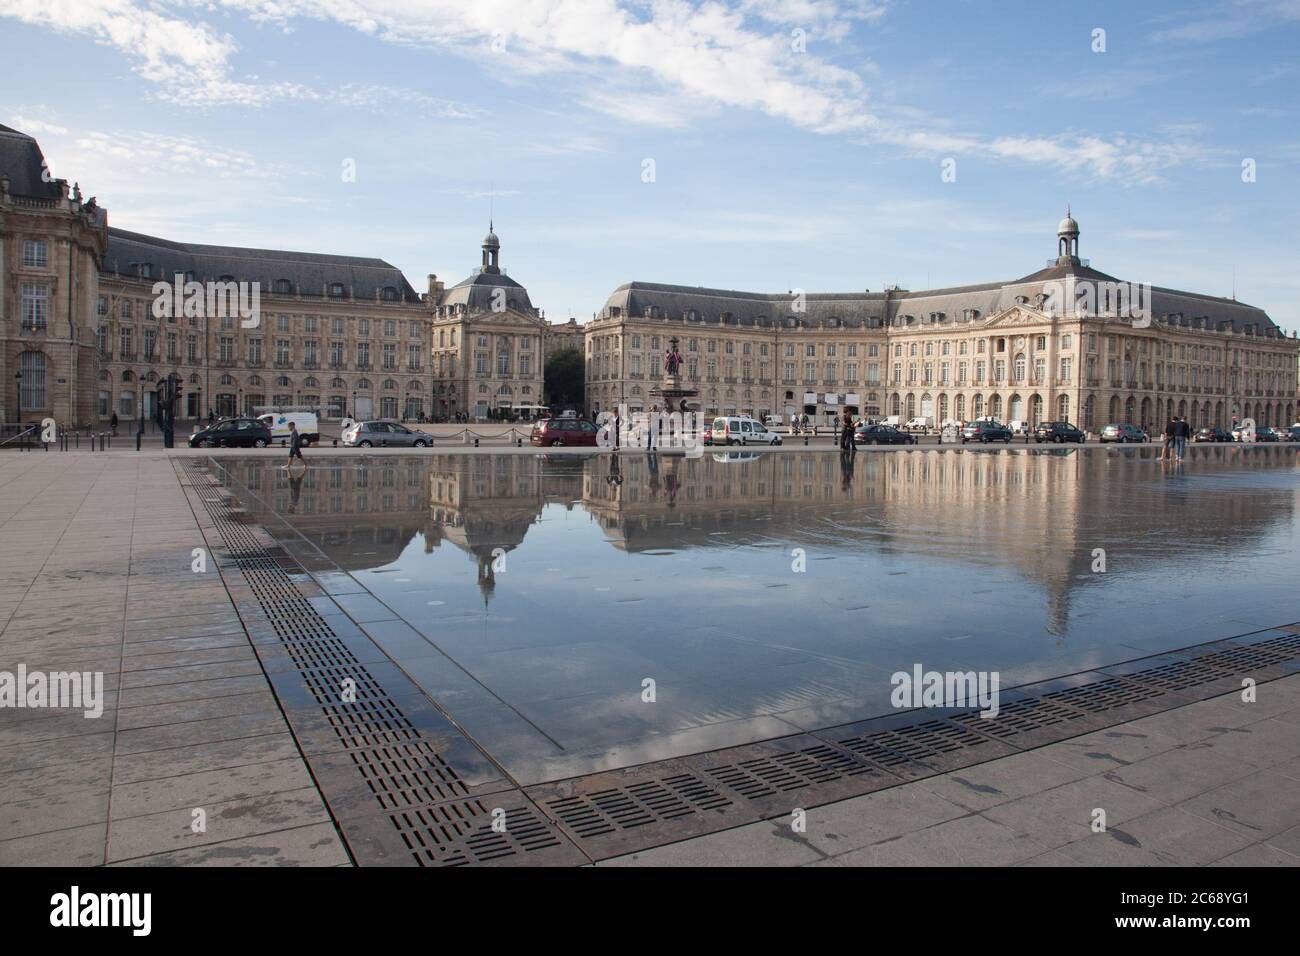 Bordeaux , Aquitaine / France - 11 07 2019 : Bordeaux square place de la Bourse reflecting from the water mirror in ancient city center France Stock Photo